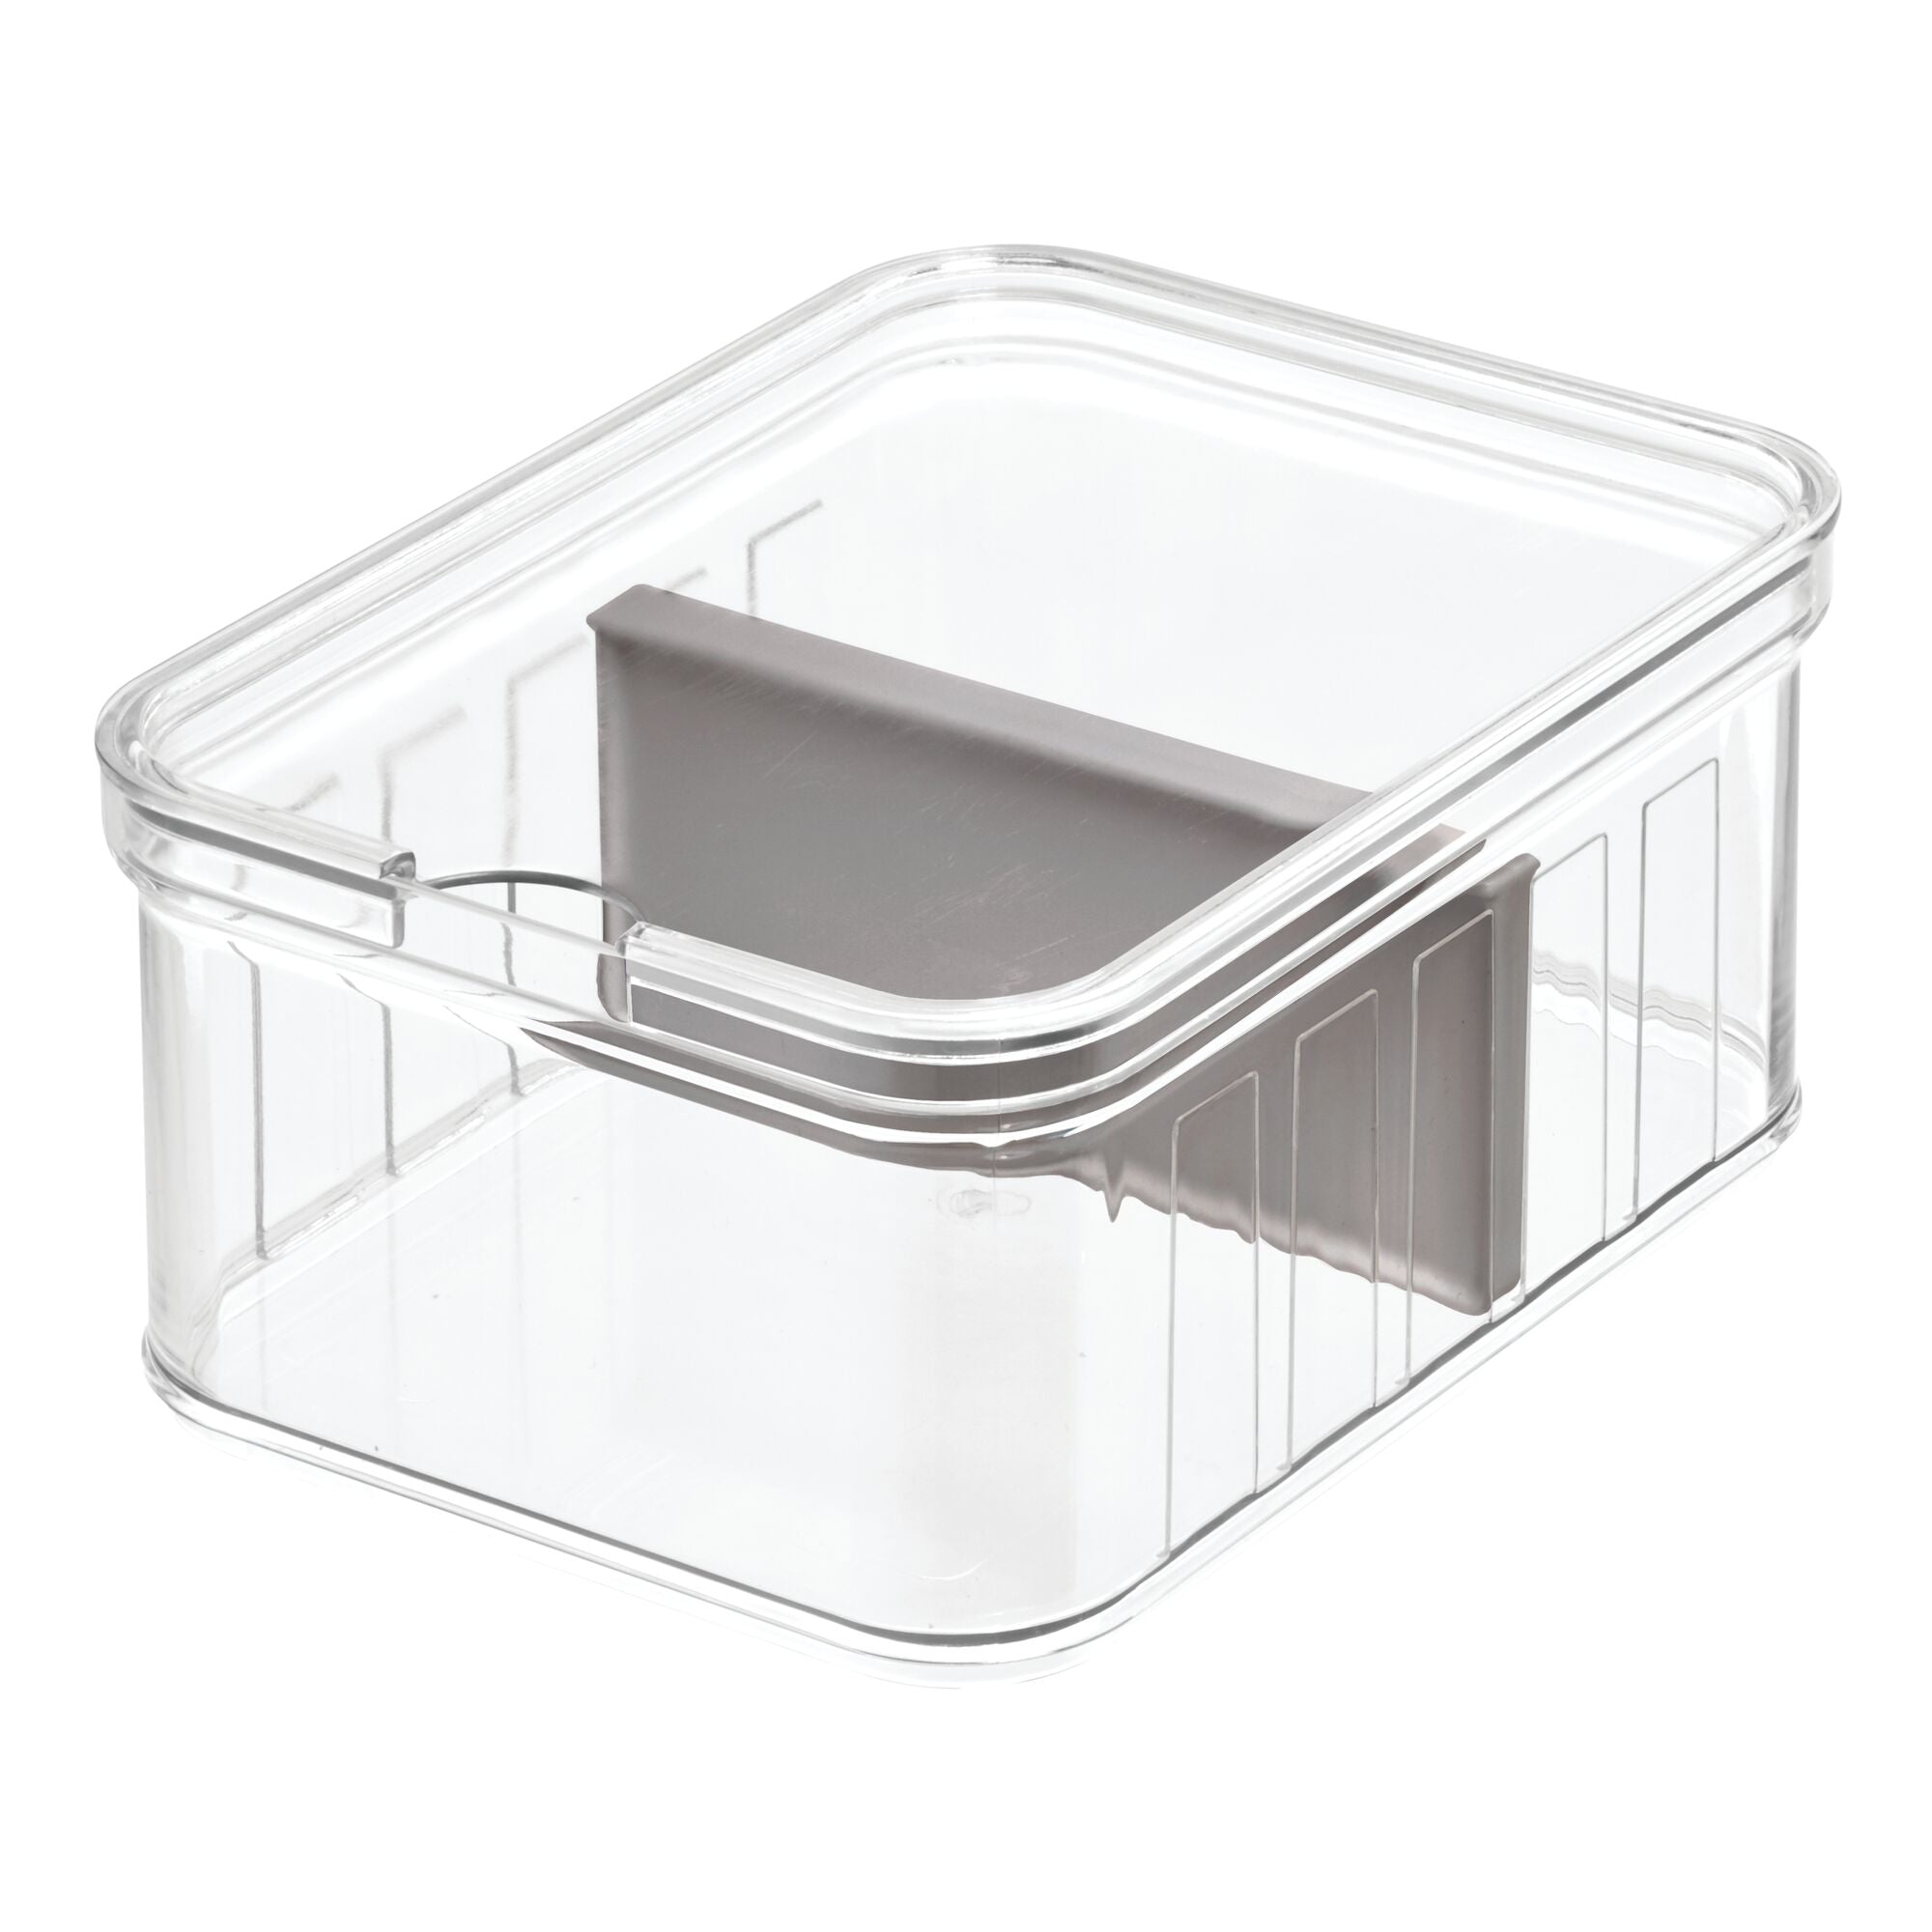 iDesign Crisp Divided Food Storage Container